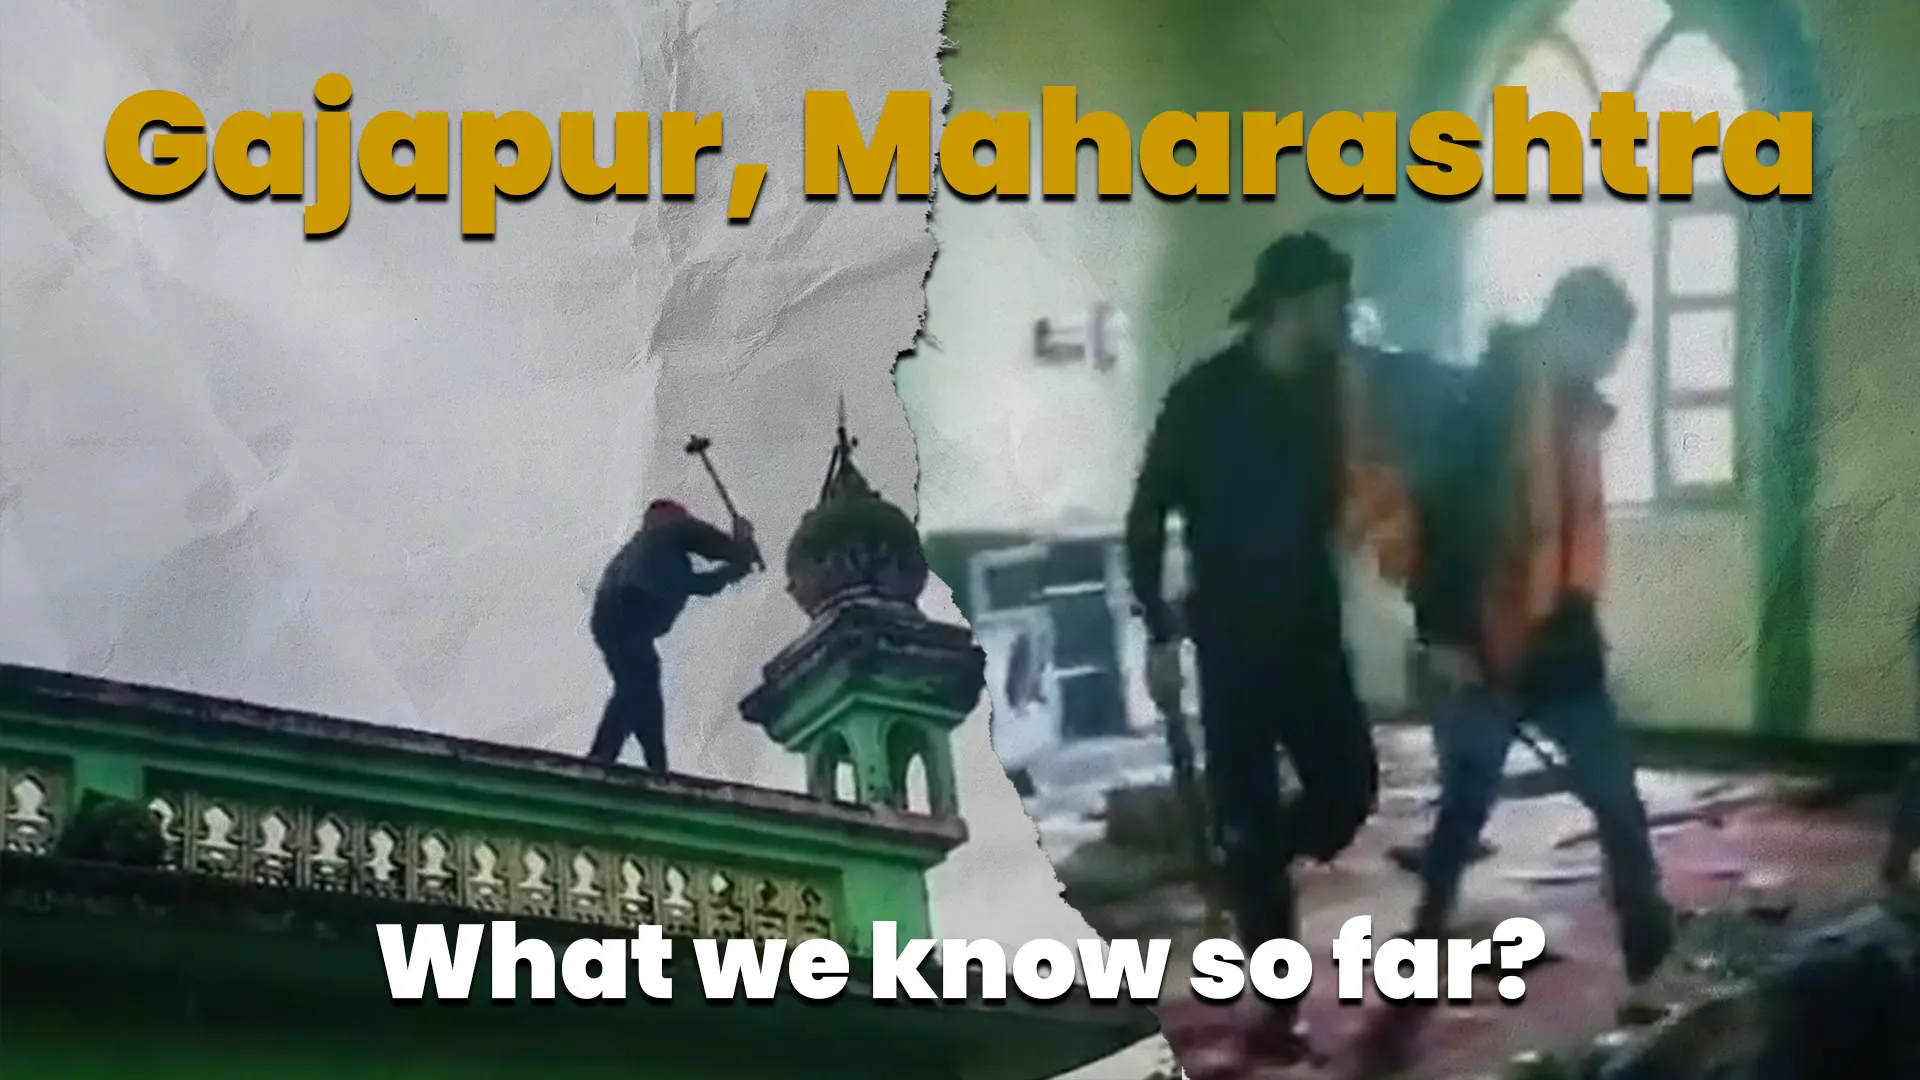 Hindutva mob vandalizes Mosque and Muslim Properties in Maharashtra’s Kolhapur. What do we know so far?